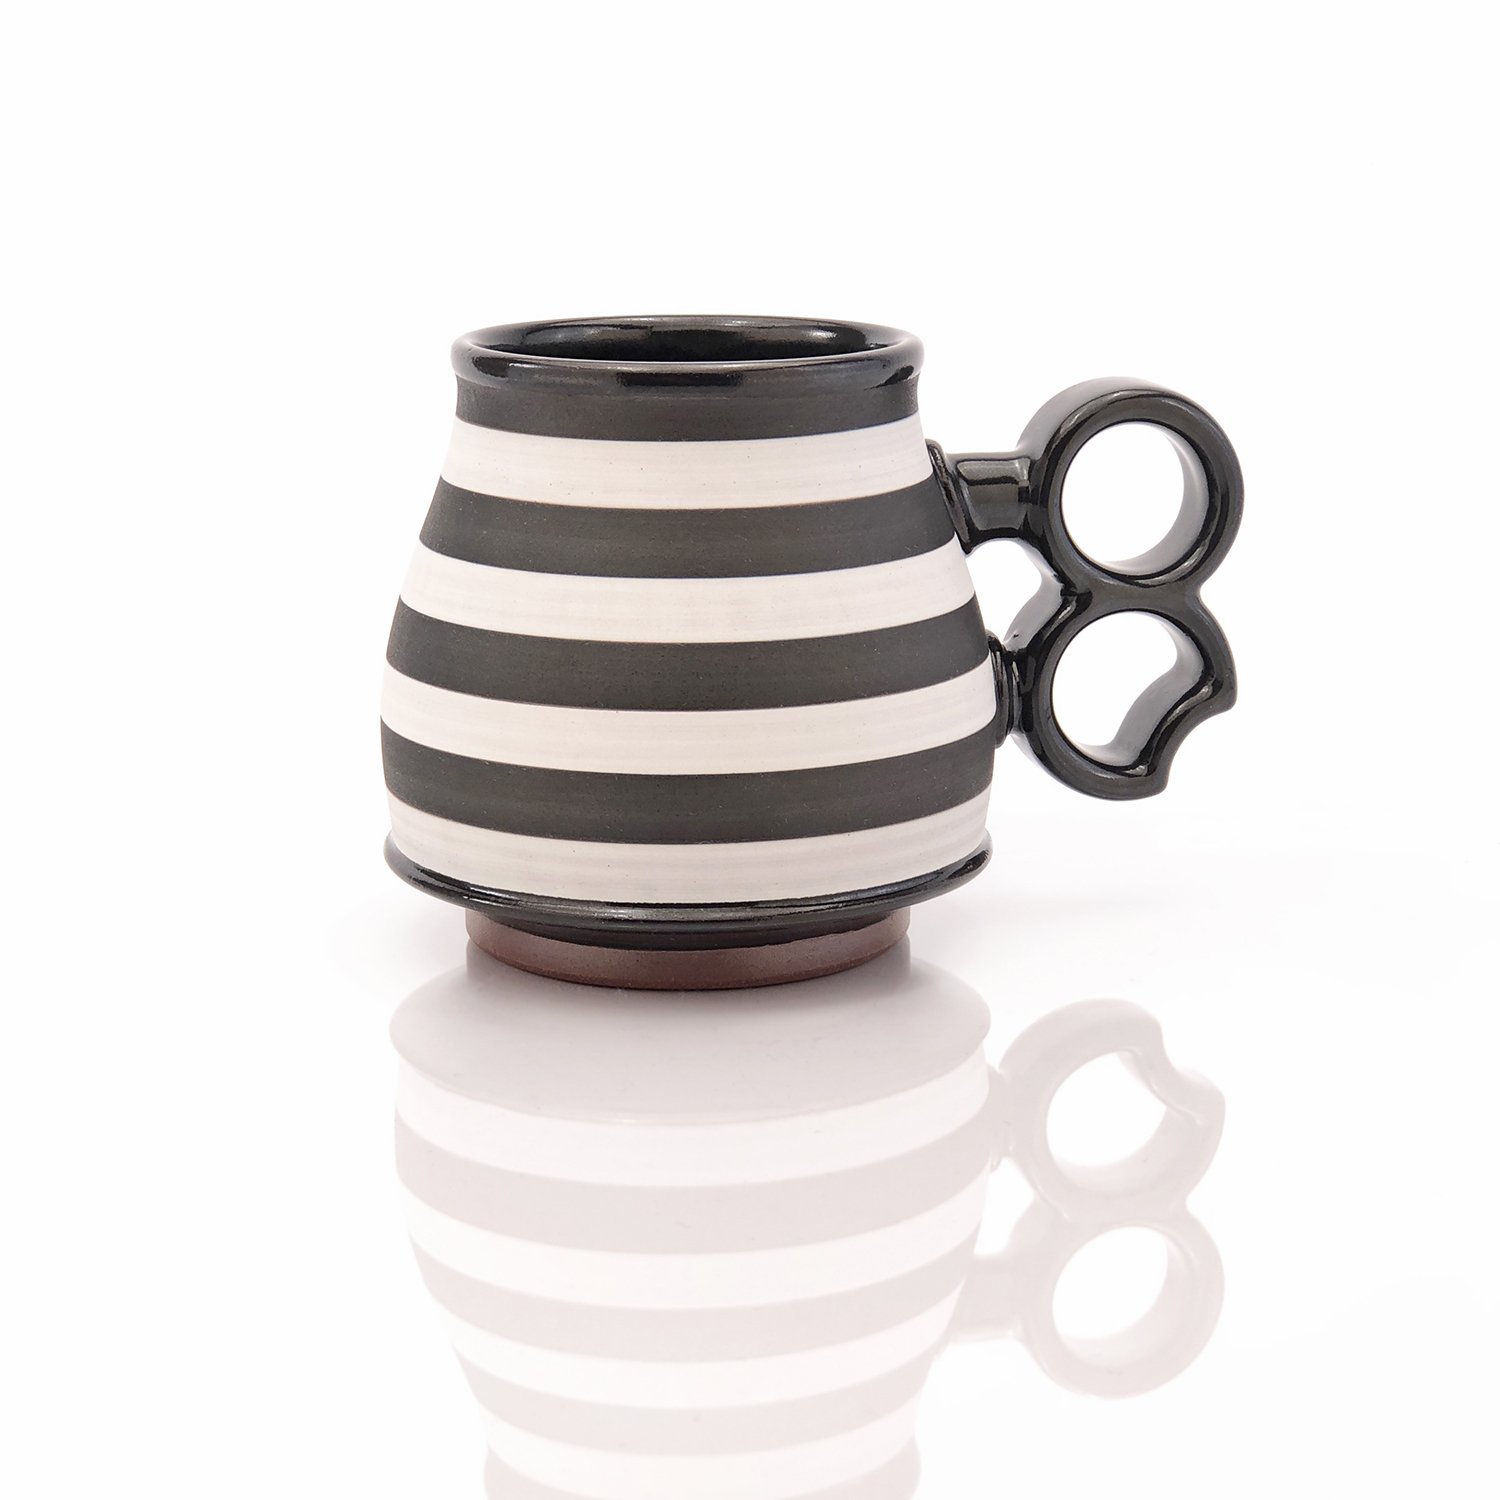 Black & white striped mug